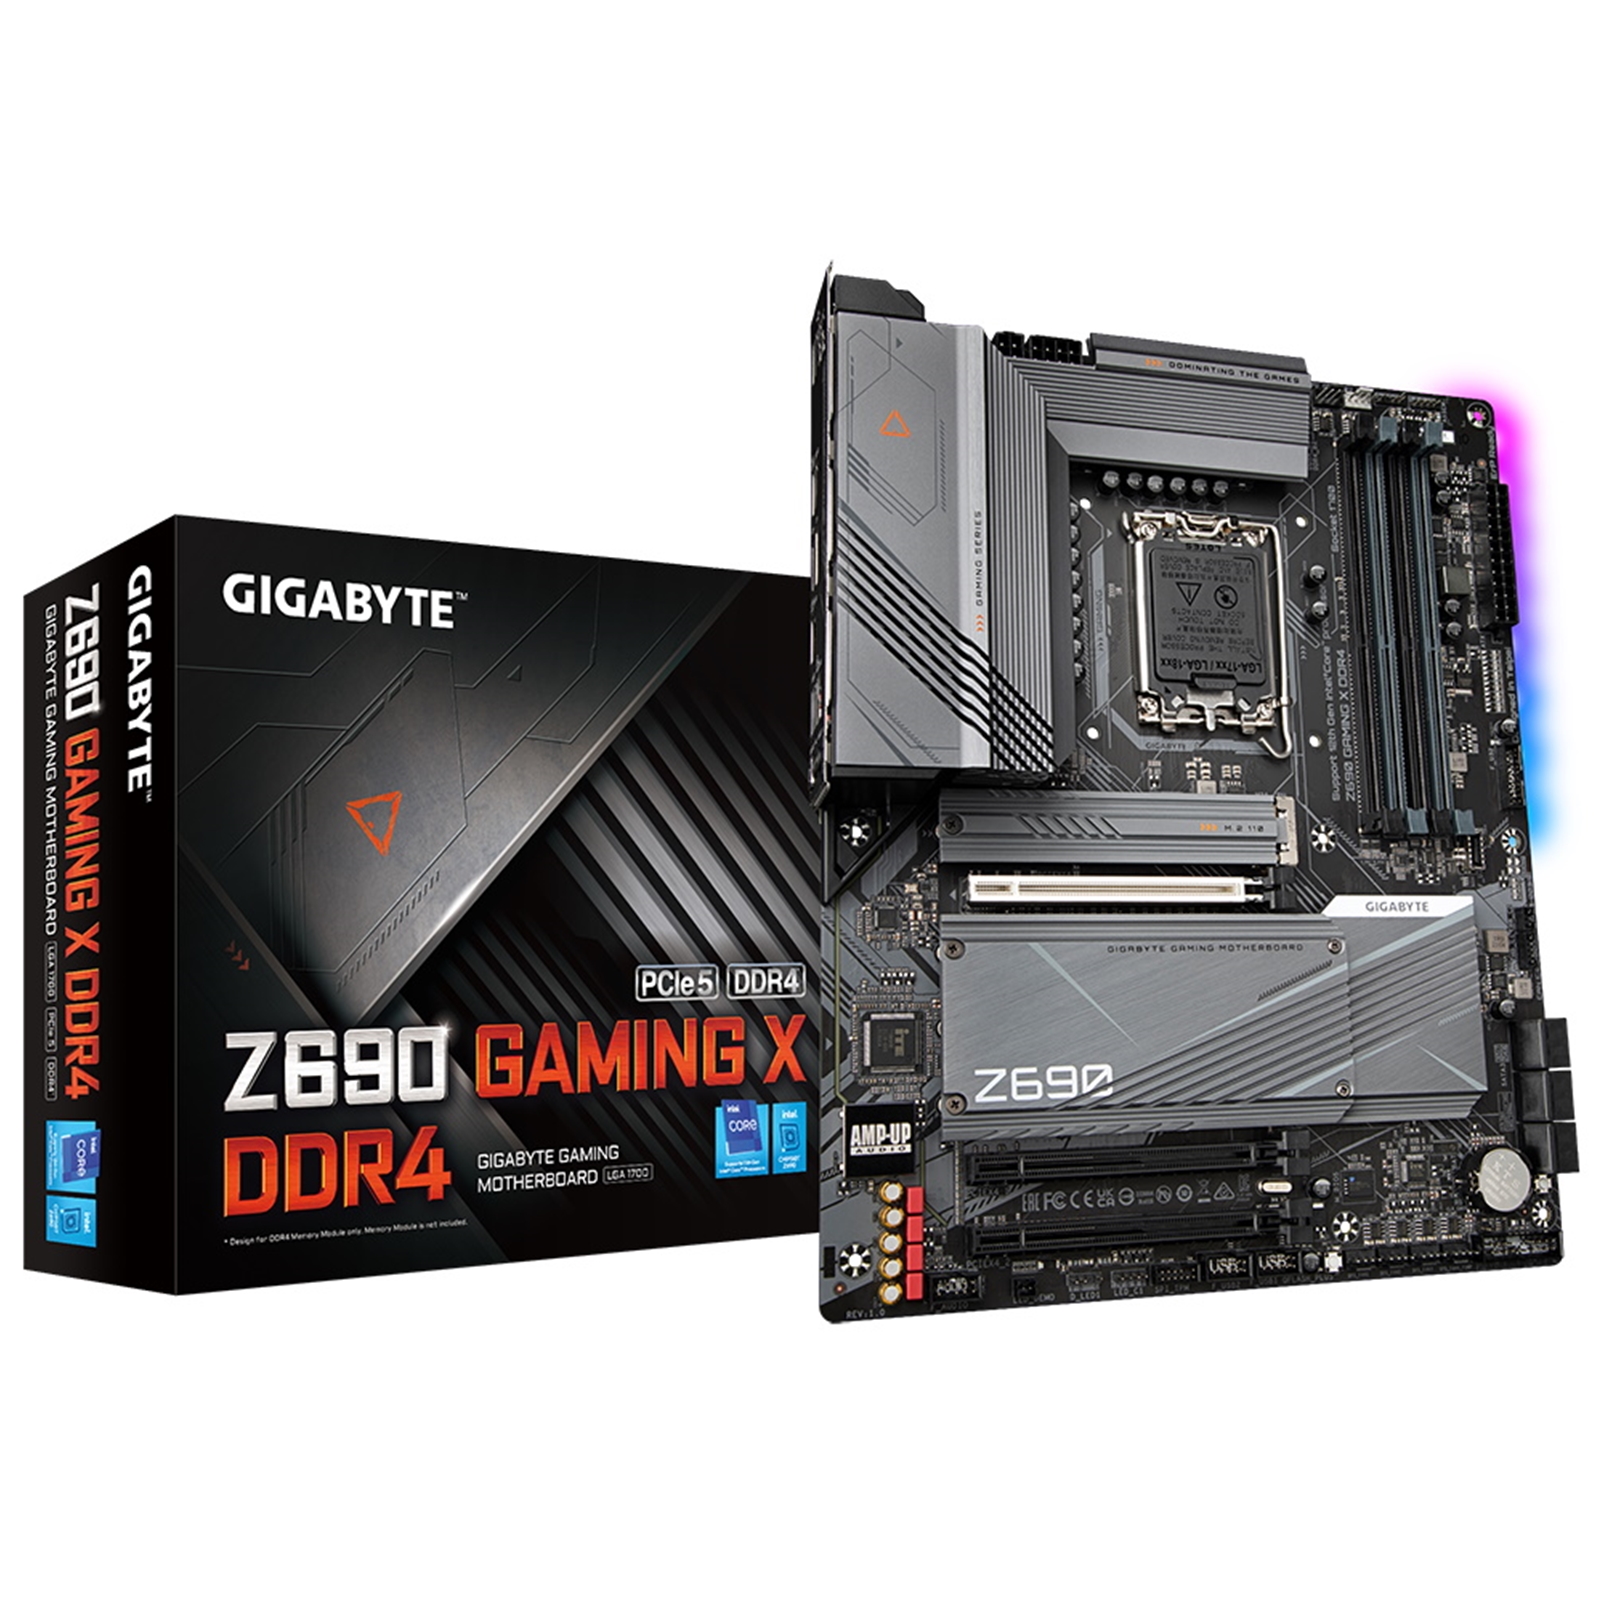 Gigabyte Z690 GAMING X DDR4 Motherboard, Intel Socket 1700, 12th Gen, 4 x PCIe 4.0, ATX, USB 3.2 Type C, RGB, 2.5GbE LAN, HDMI, DisplayPort, Fully Covered Thermal Design, Q-Flash Plus